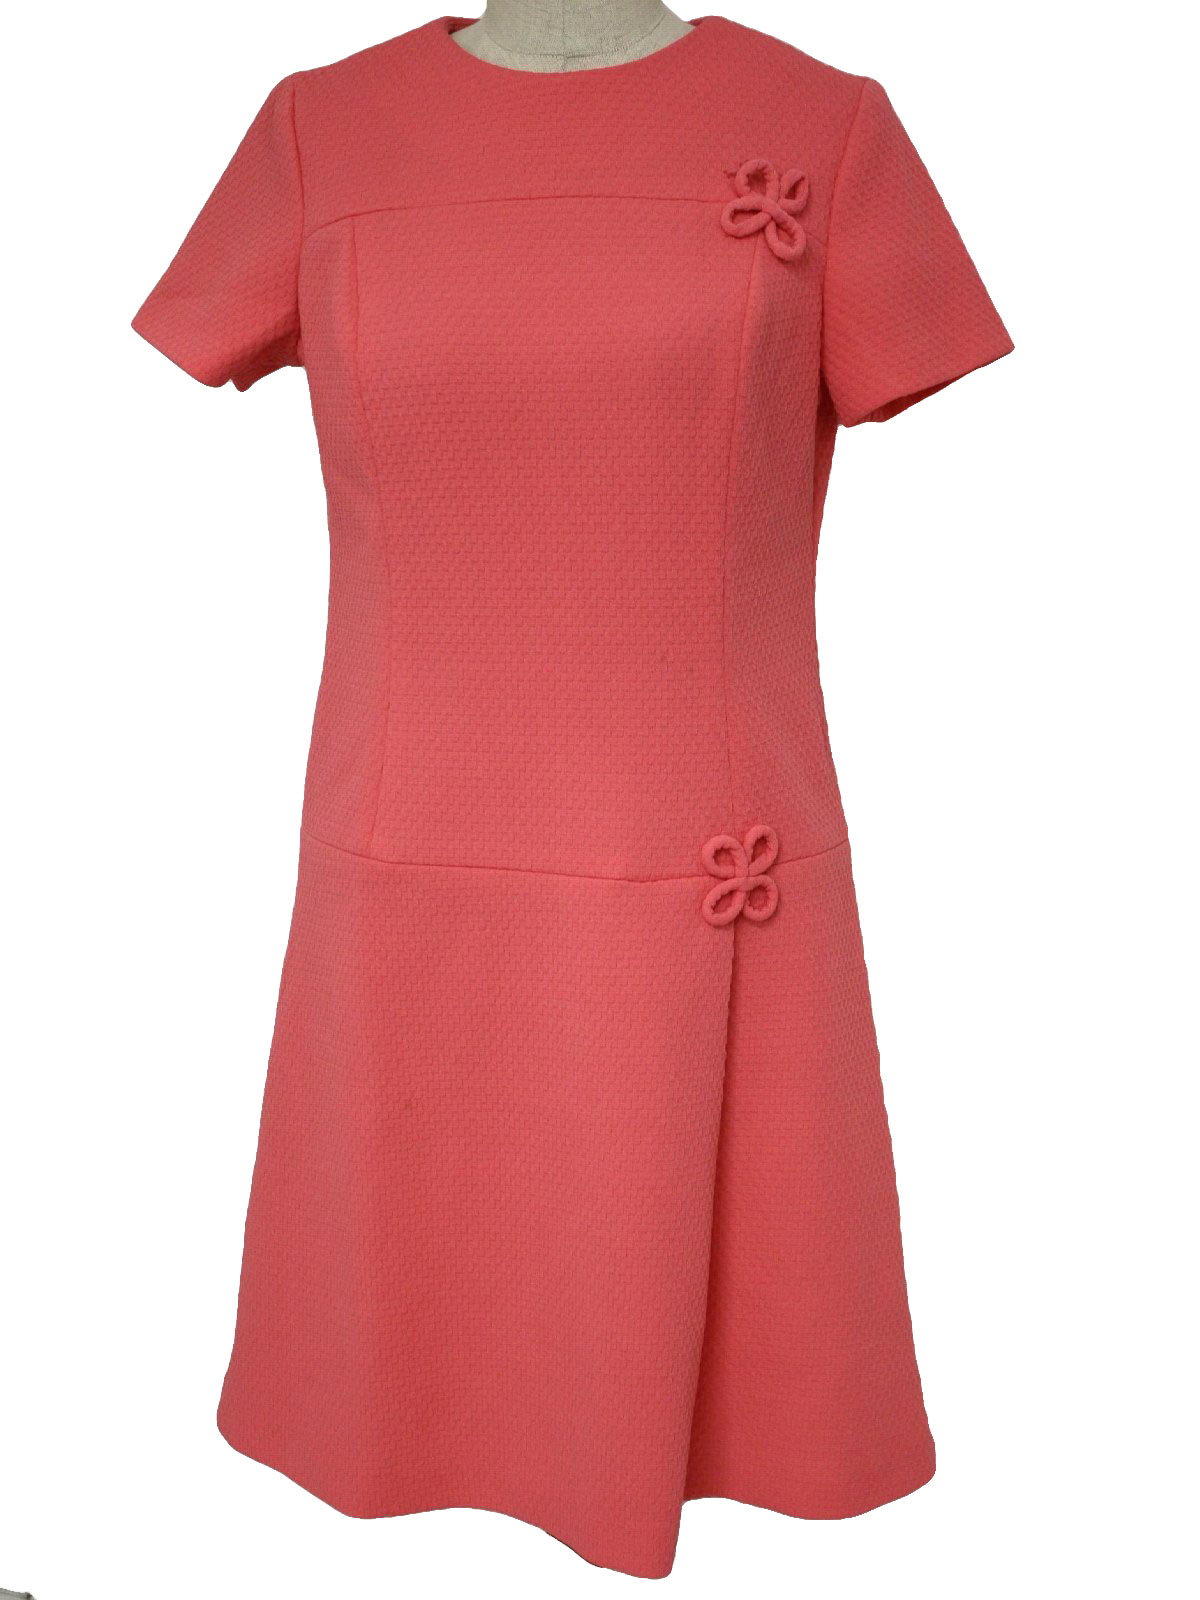 Retro 1970s Dress: 70s -no label- Womens hot pink short sleeve textured ...